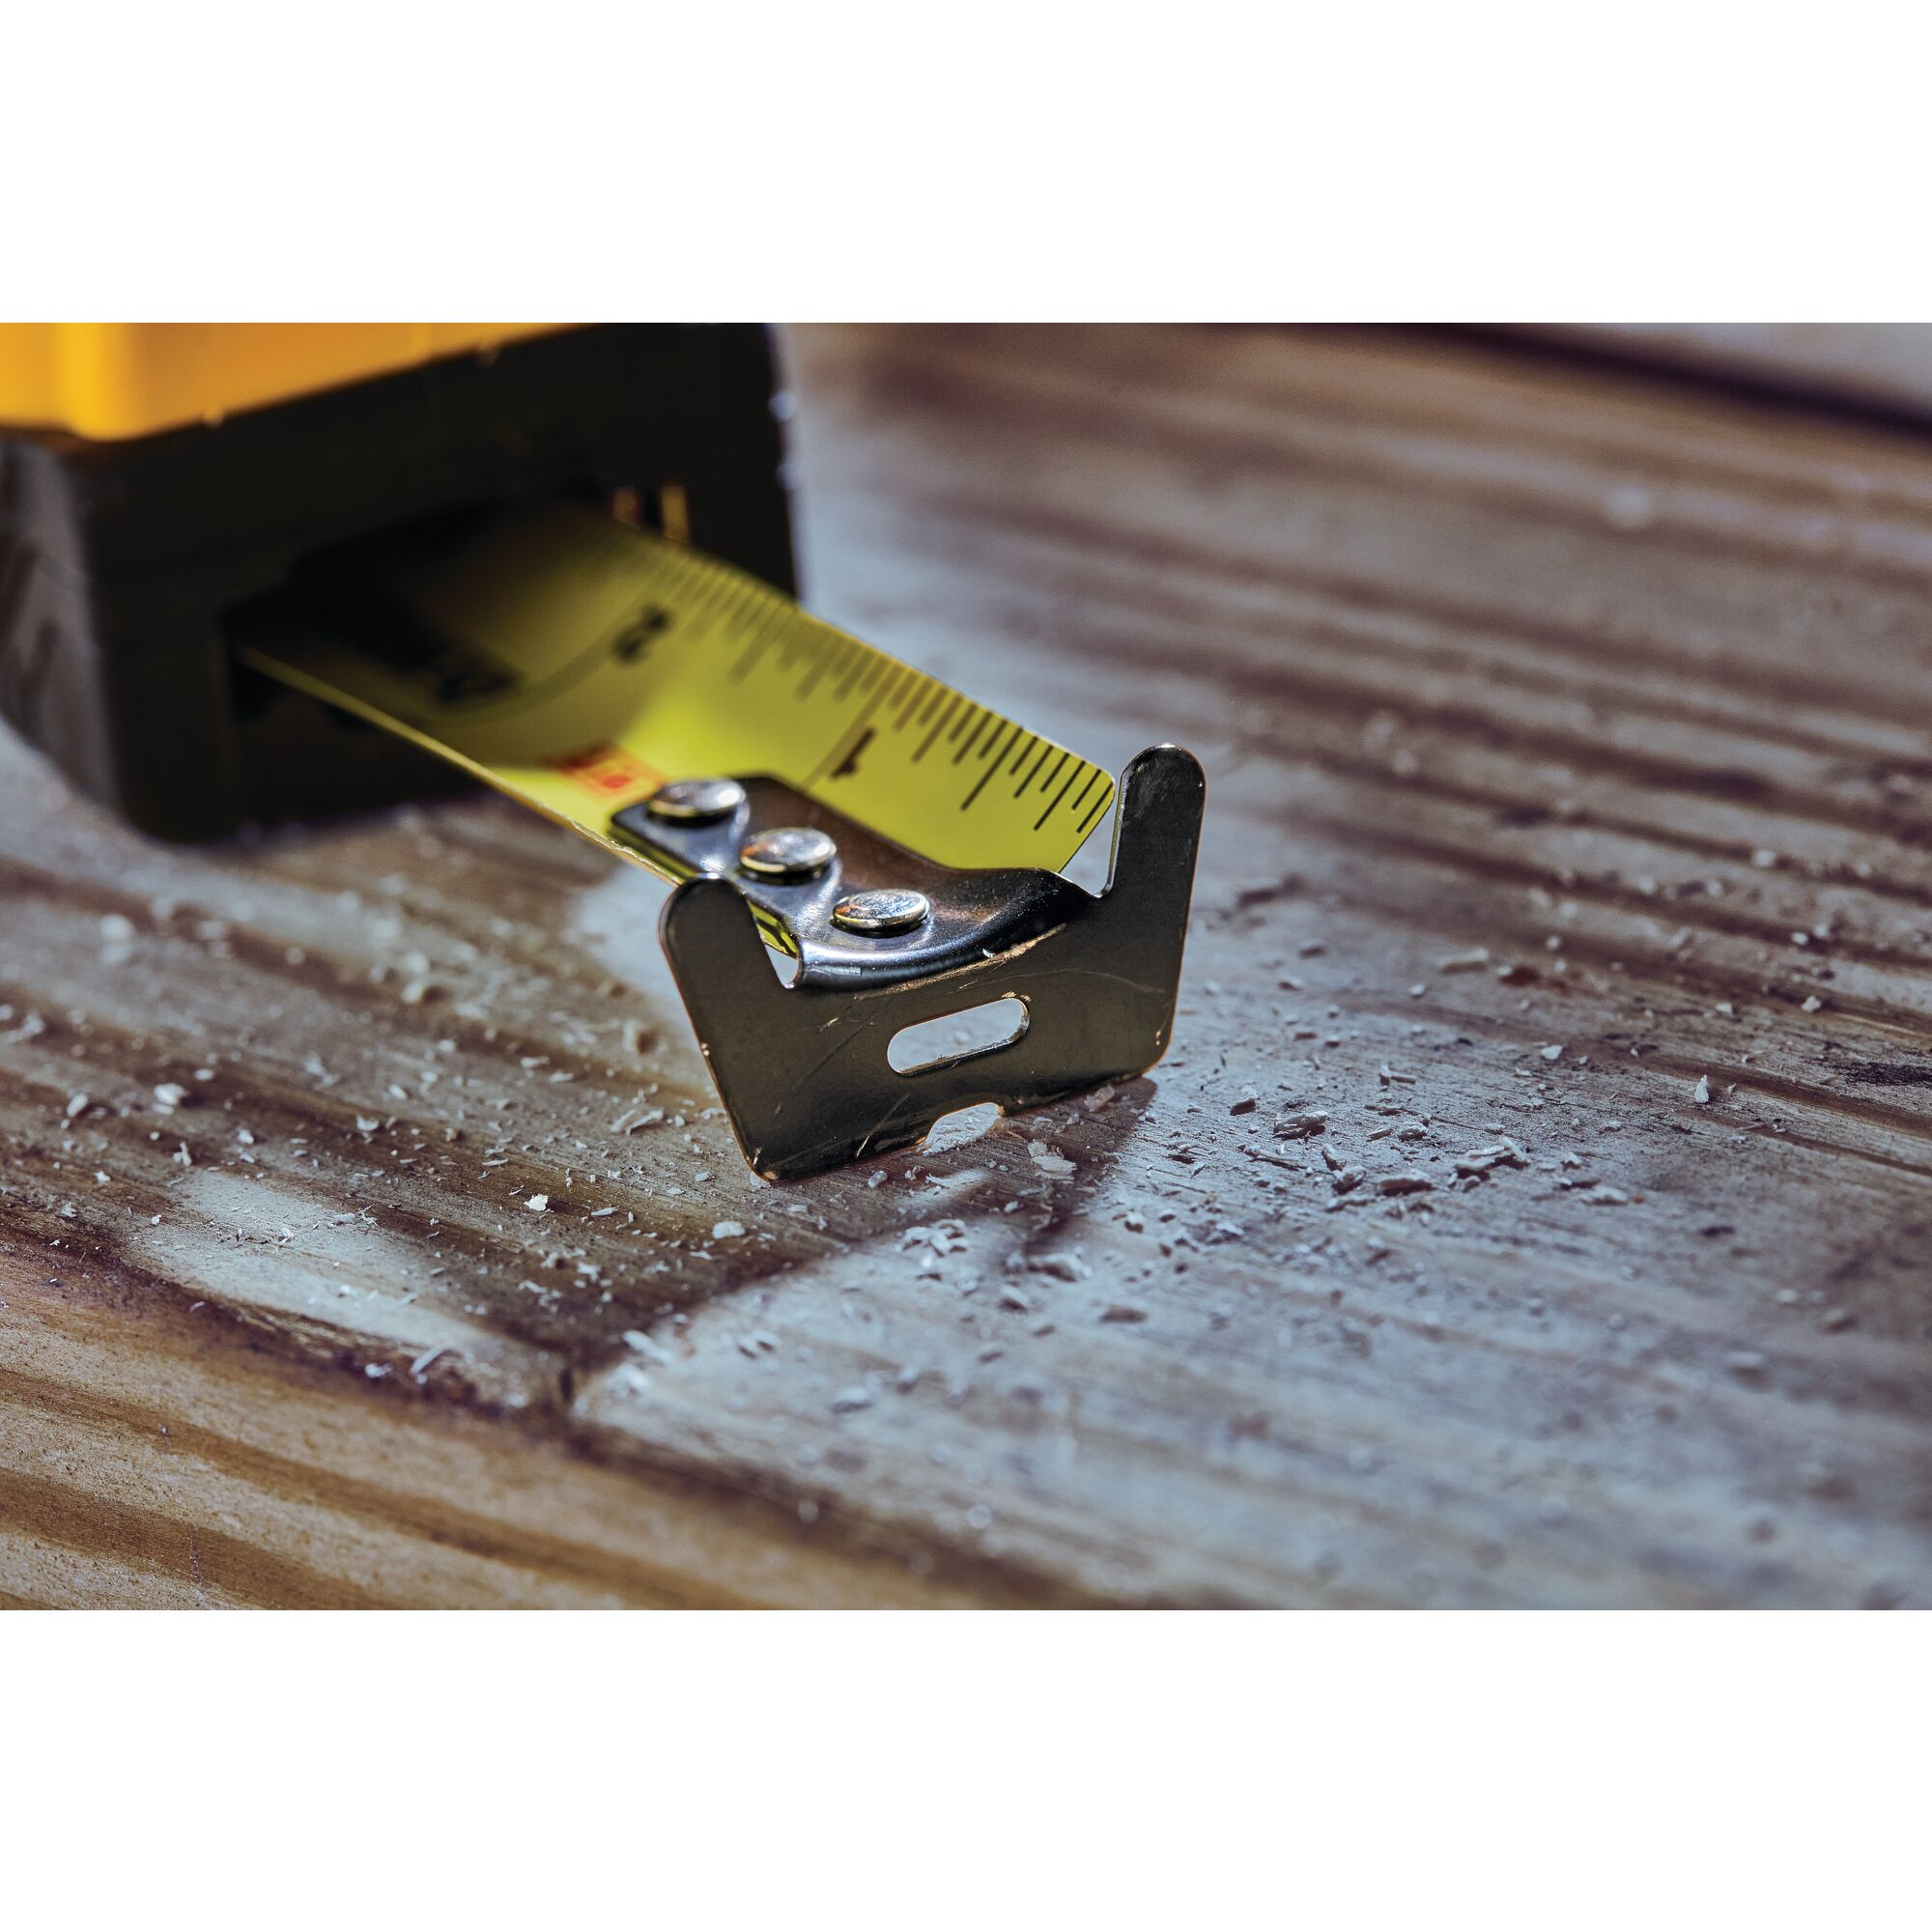 Standard Tape Measure DeWalt DWHT36109 1-1/8 x 30 ft Belt Clip Yellow/Black